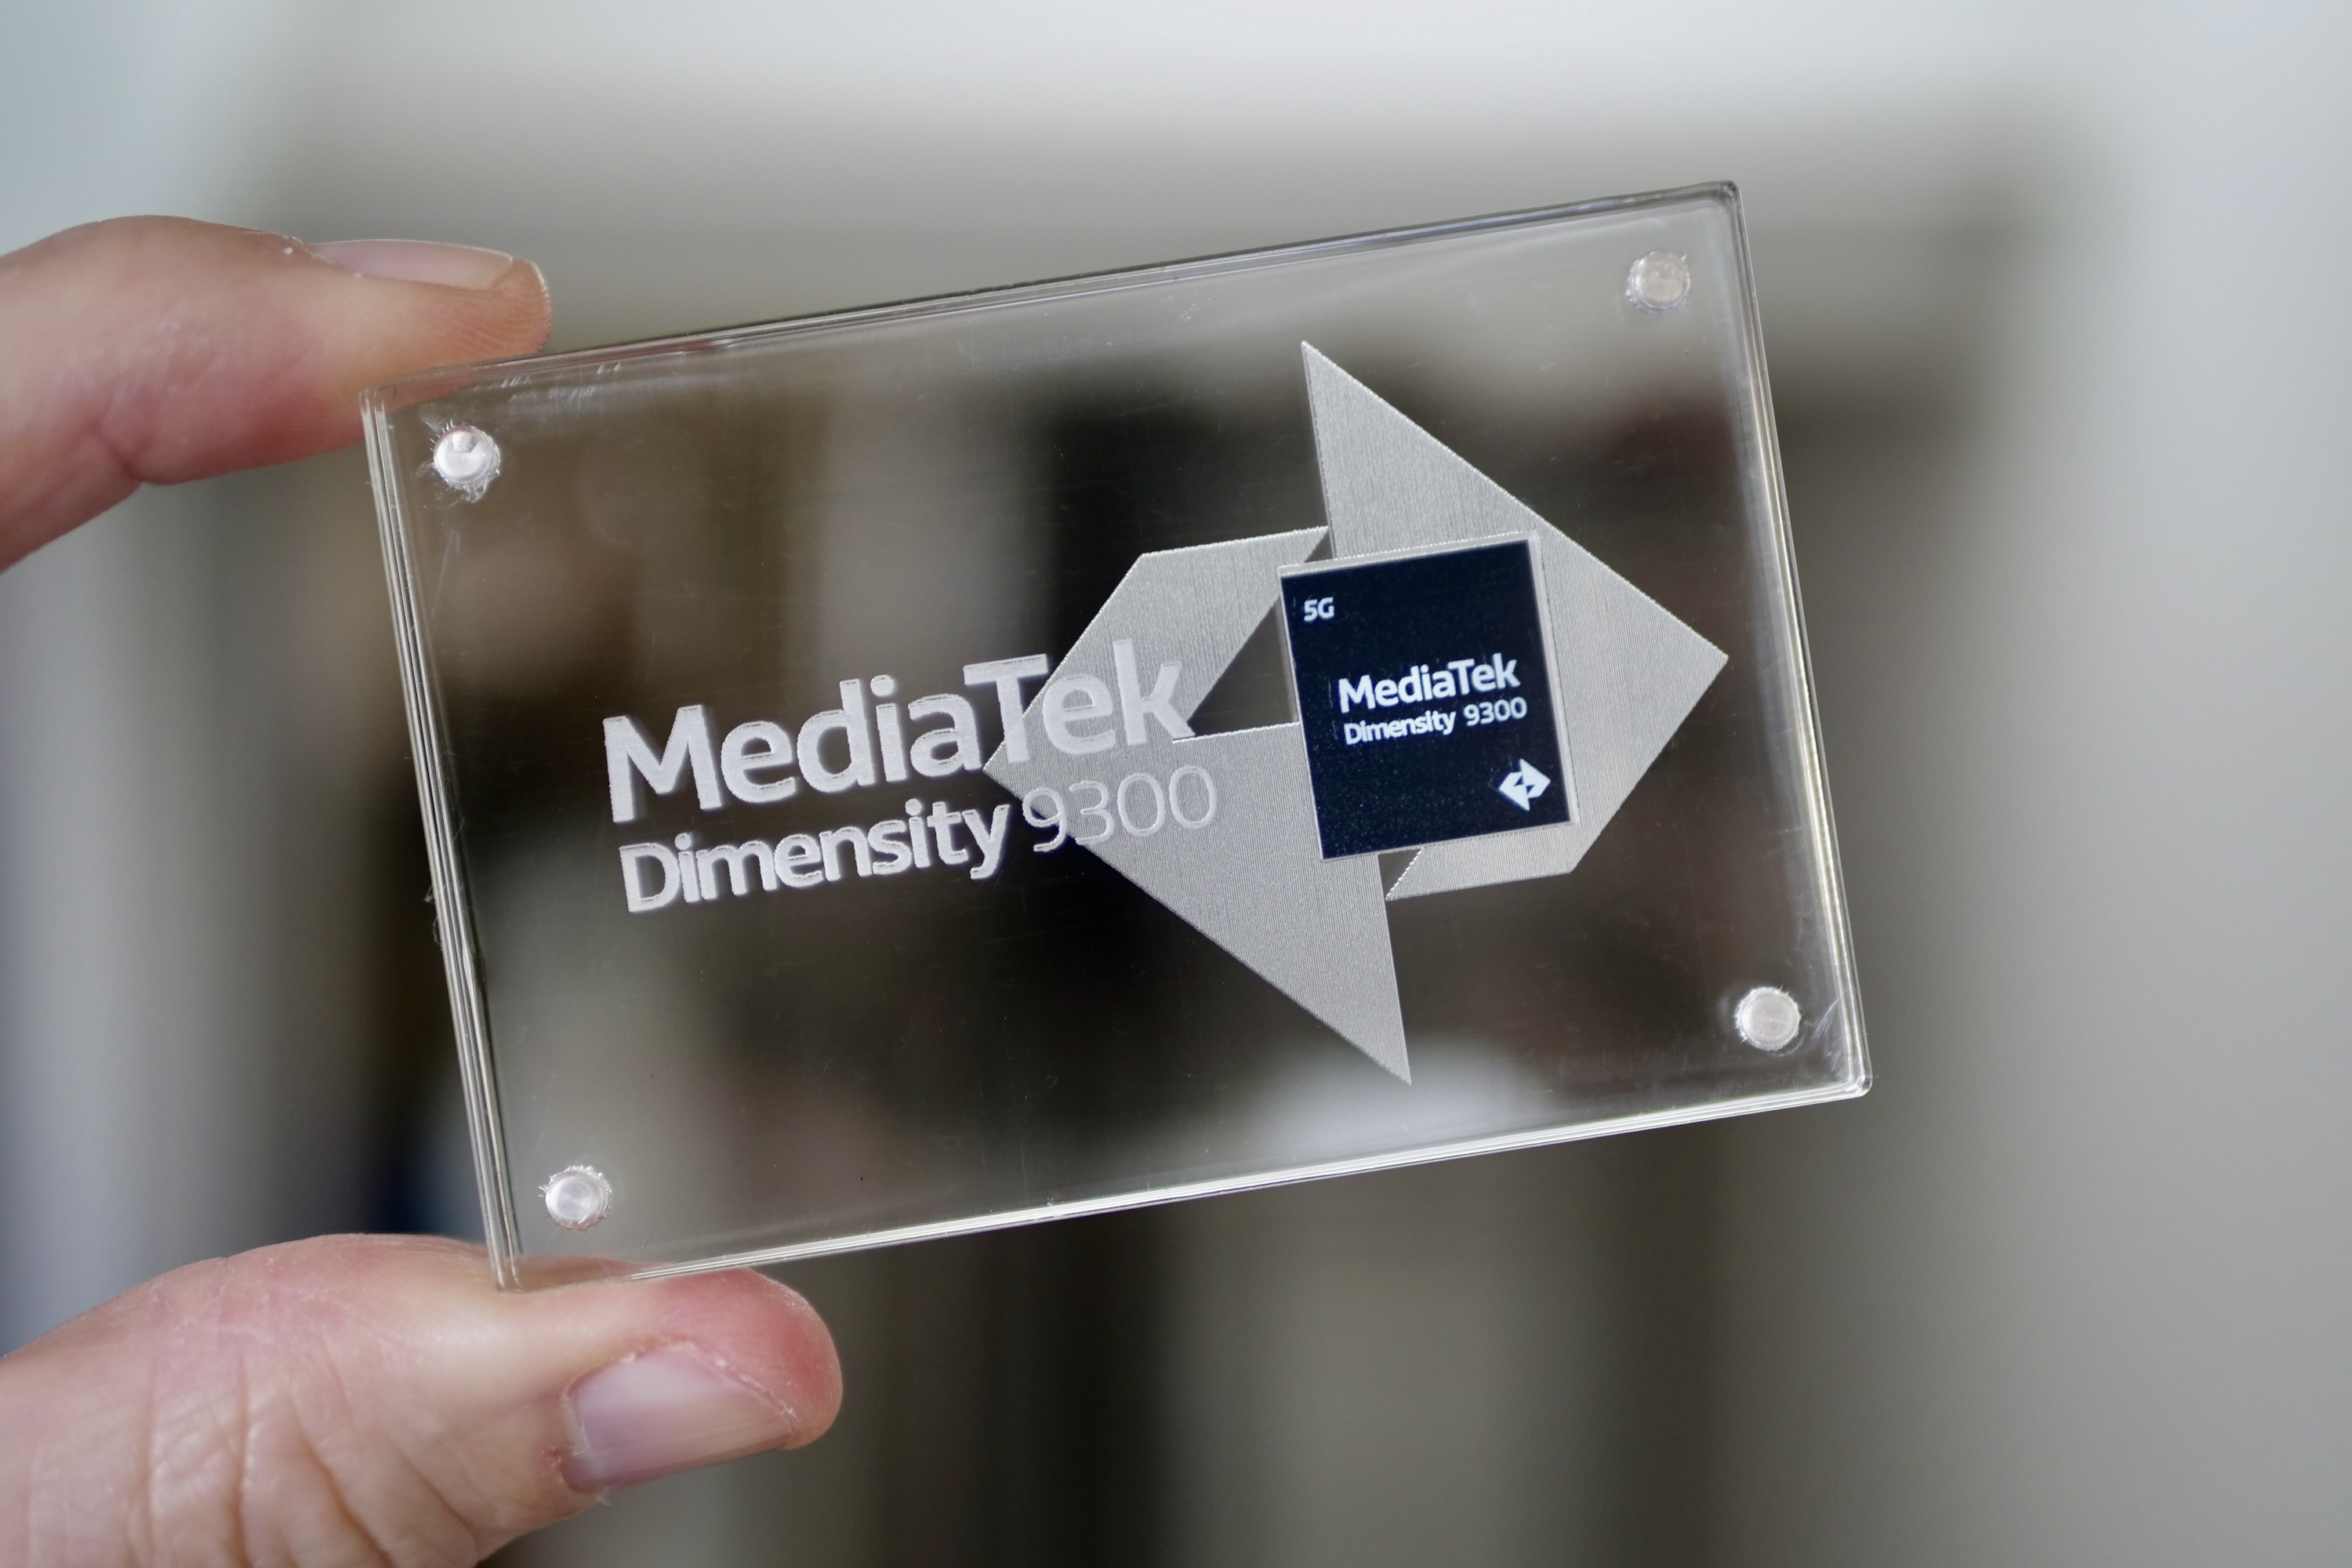 The MediaTek Dimensity 9300 processor in a case.